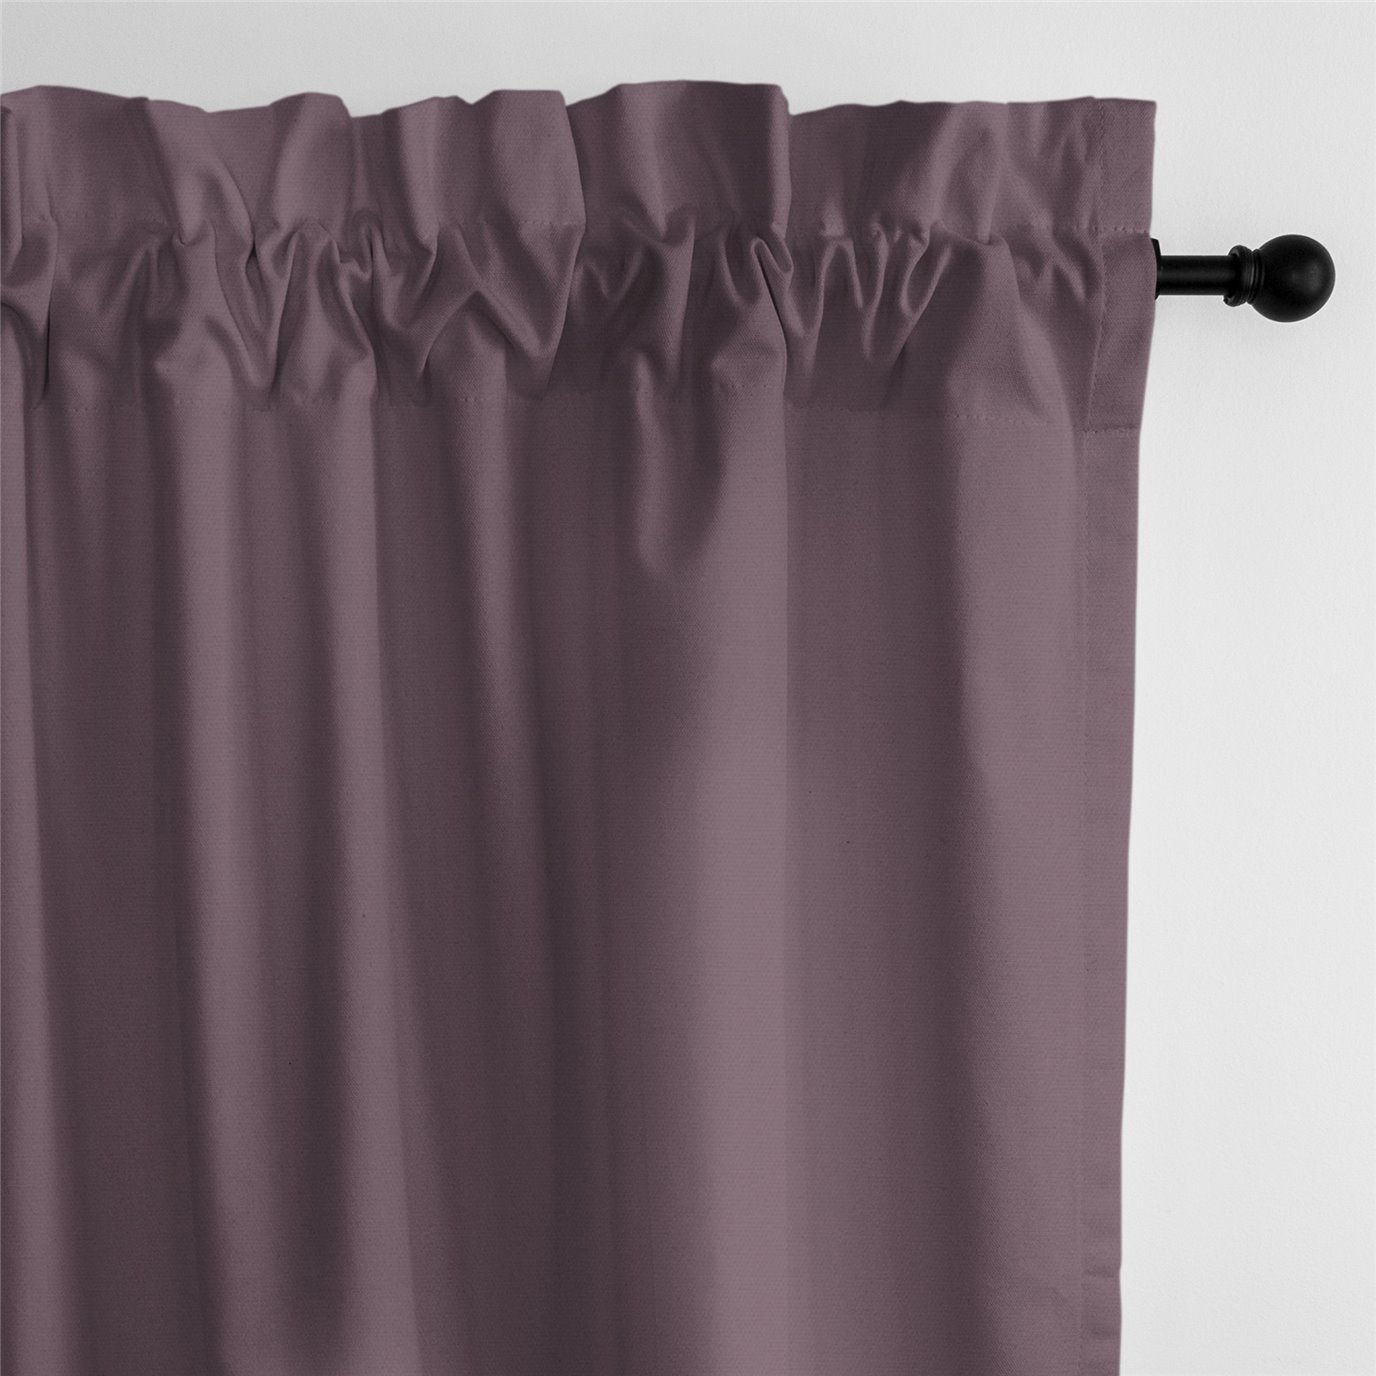 Braxton Purple Grape Pole Top Drapery Panel - Pair - Size 50"x144"